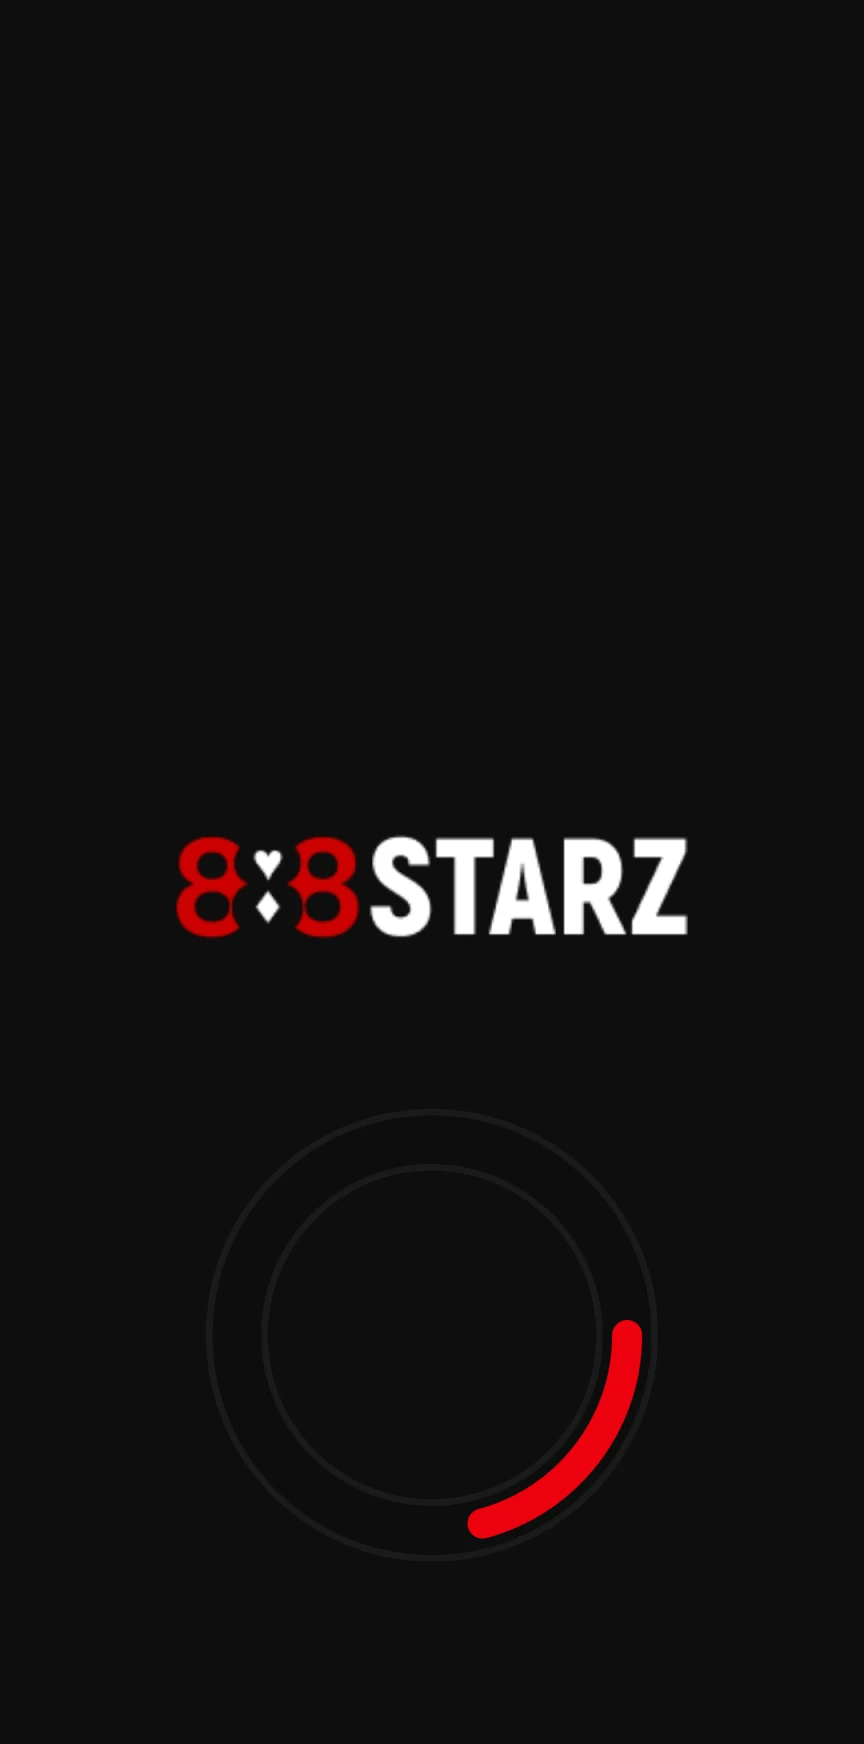 Instale o aplicativo 888starz para iOS.